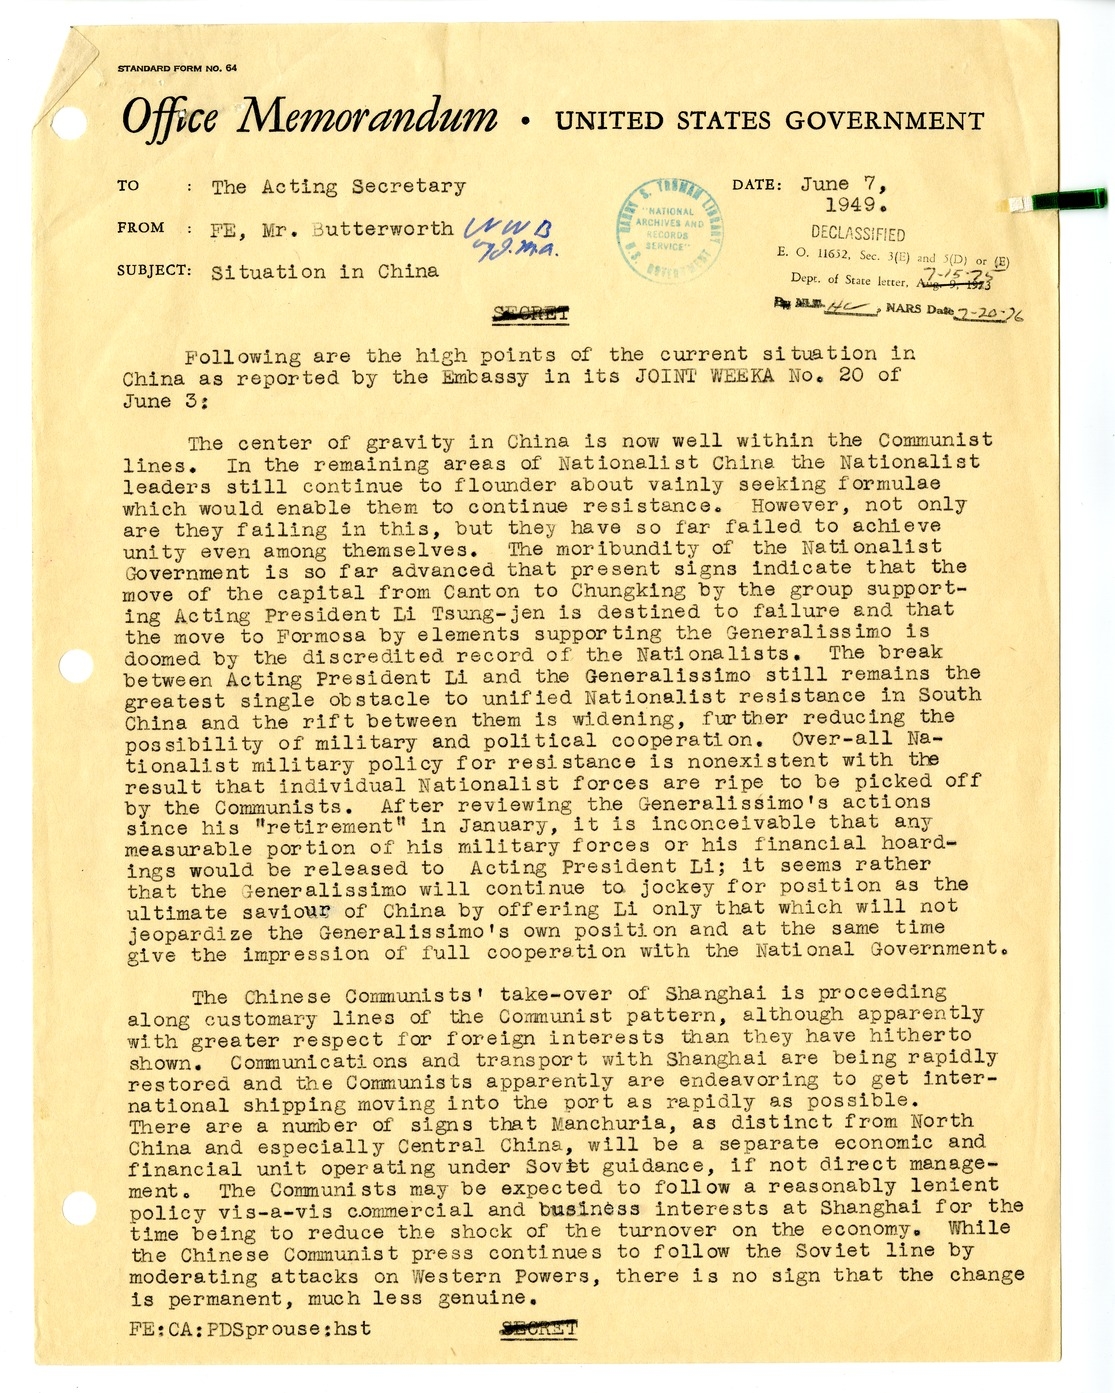 Memorandum from Walton Butterworth to The Acting Secretary of State